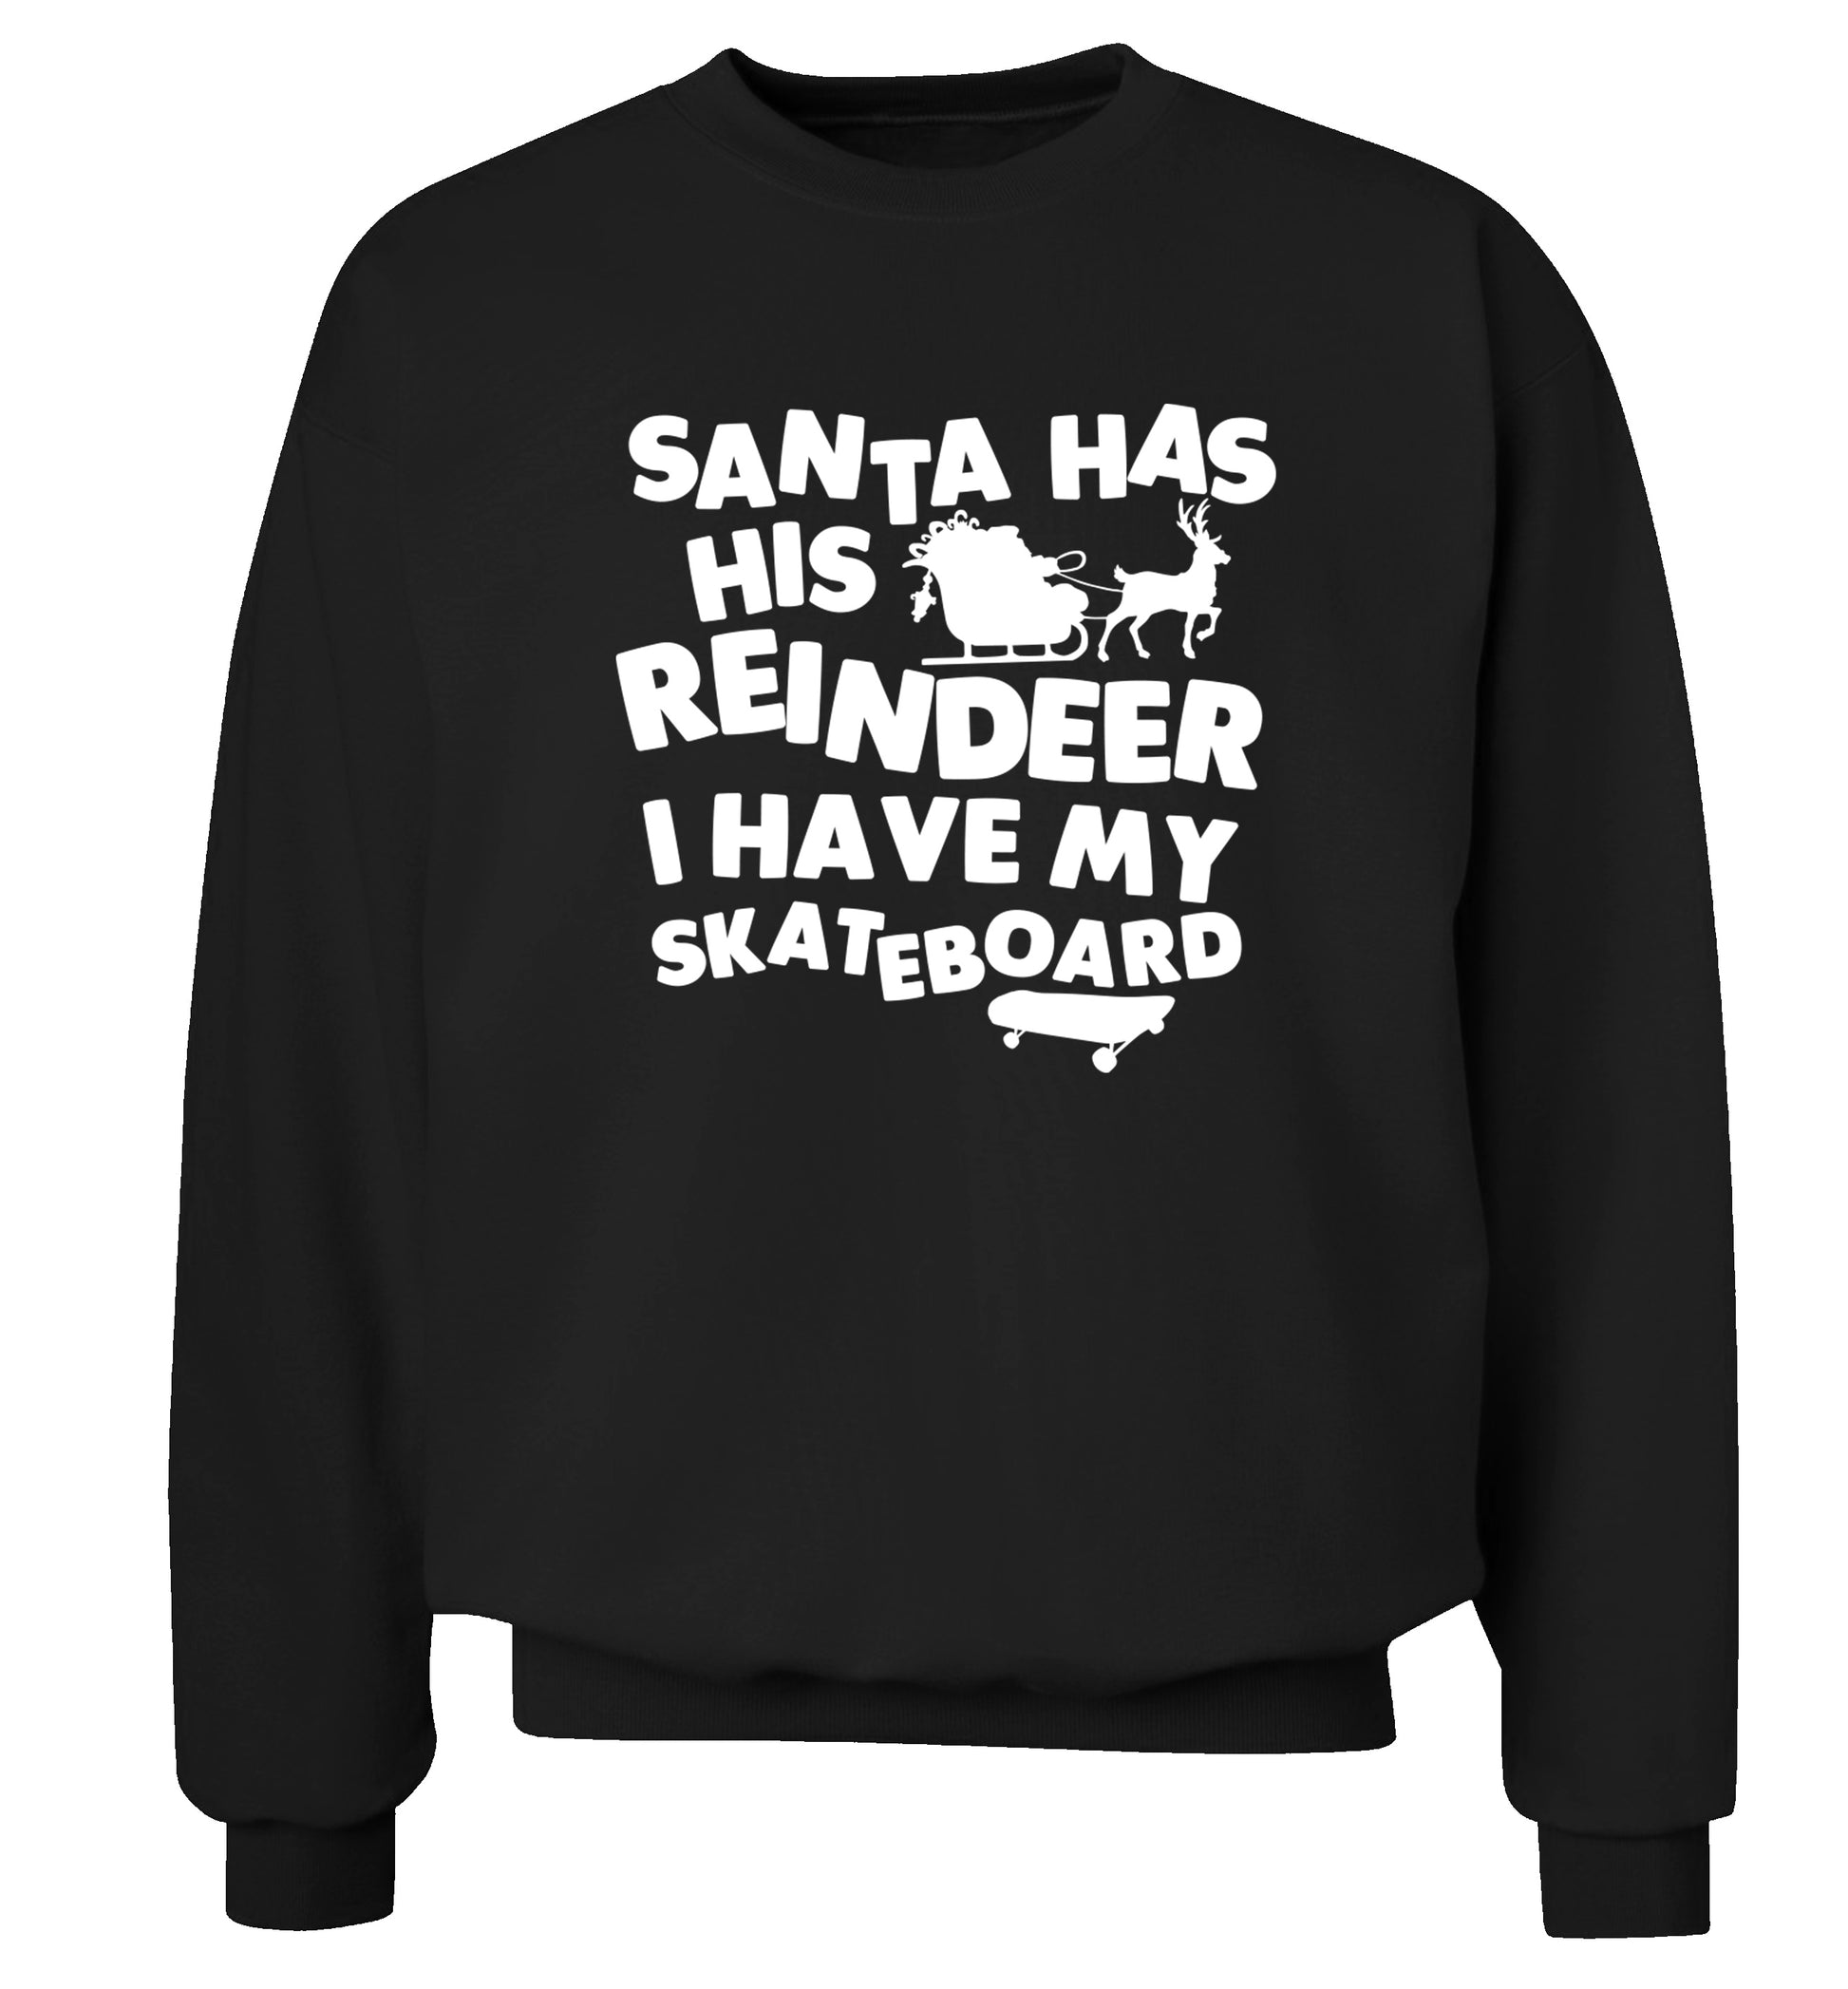 Santa has his reindeer I have my skateboard Adult's unisex black Sweater 2XL